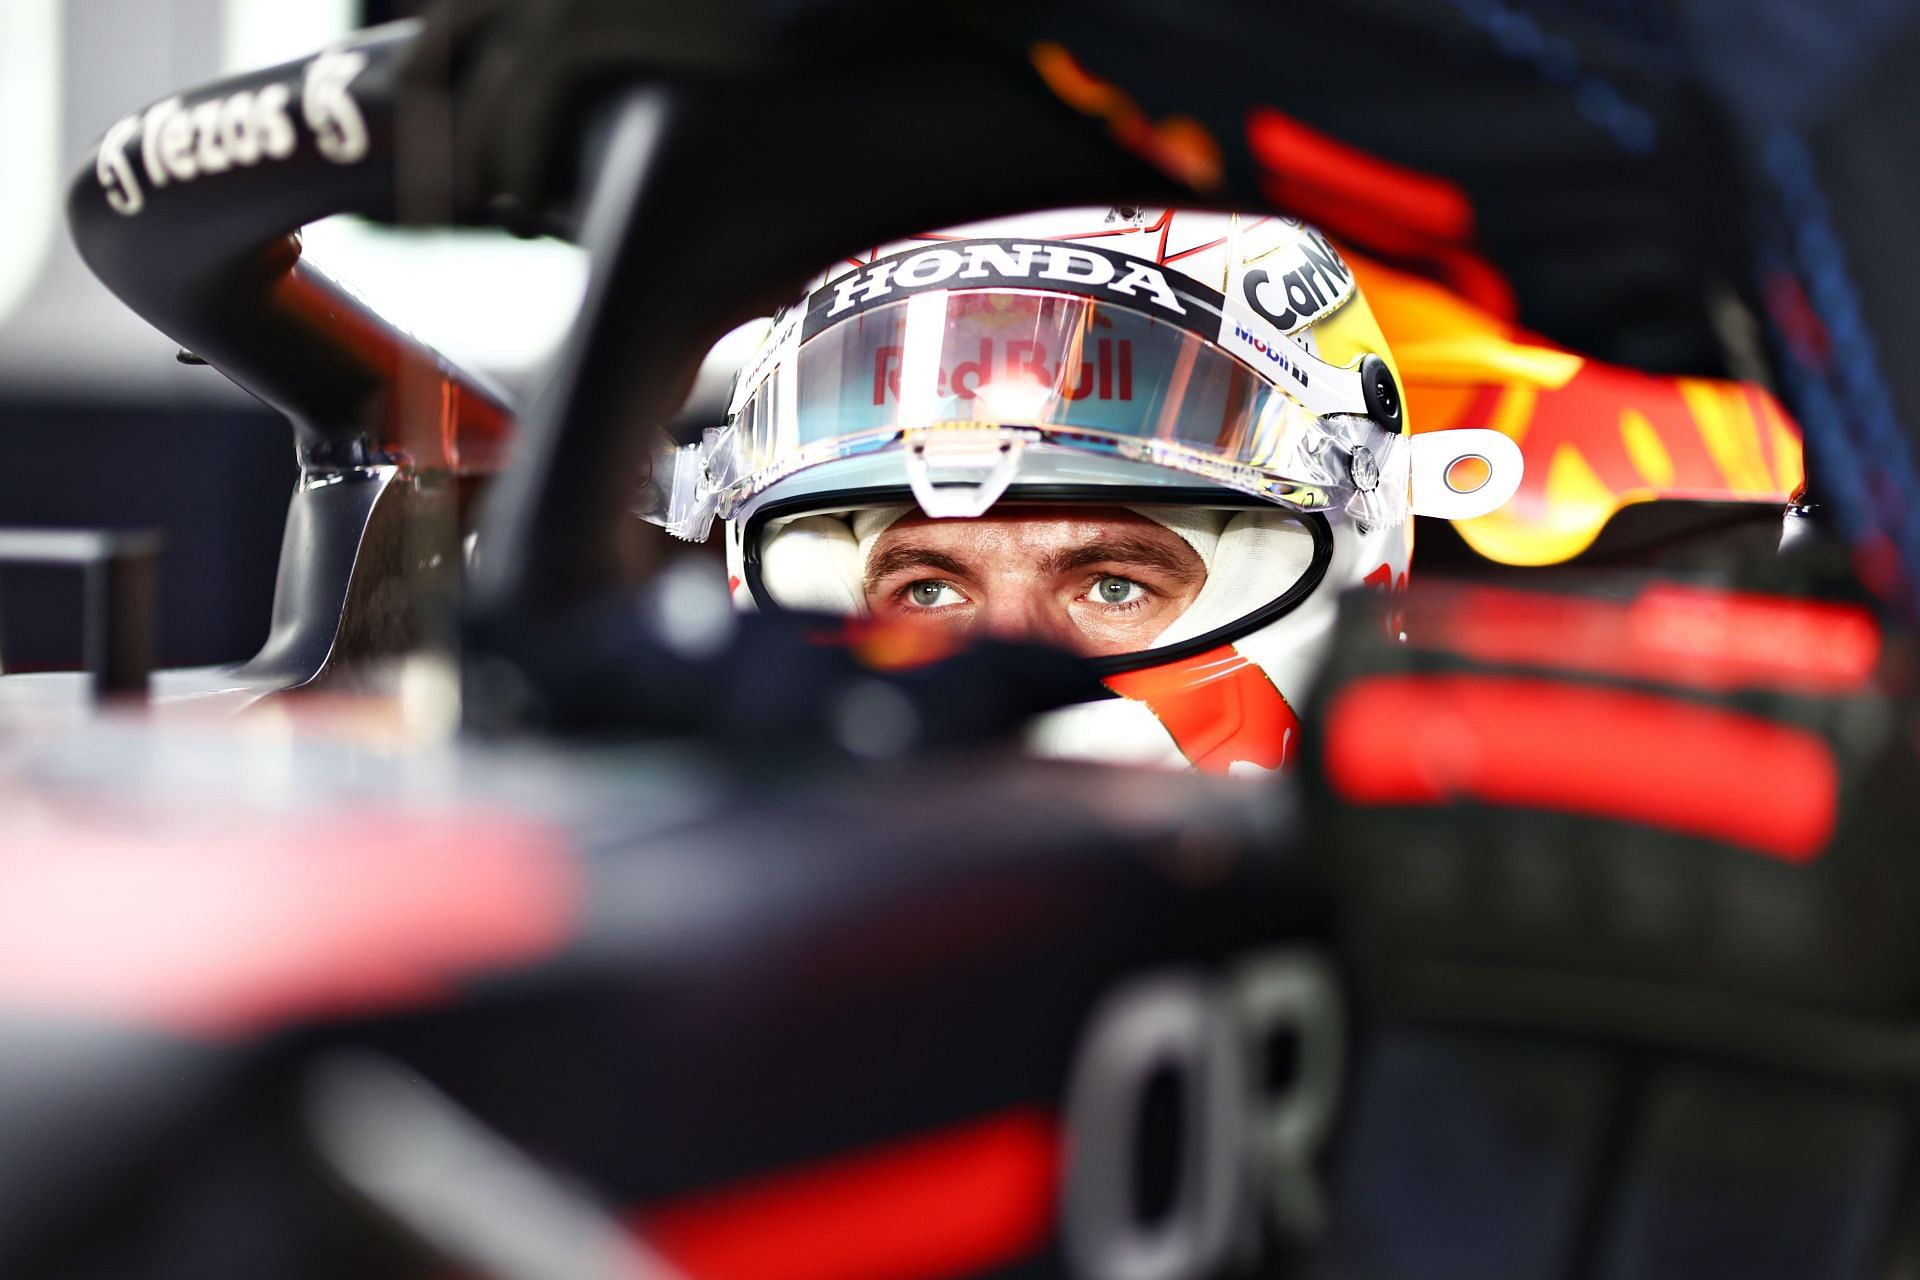 F1 Grand Prix of Qatar - Max Verstappen focuses on the task ahead.